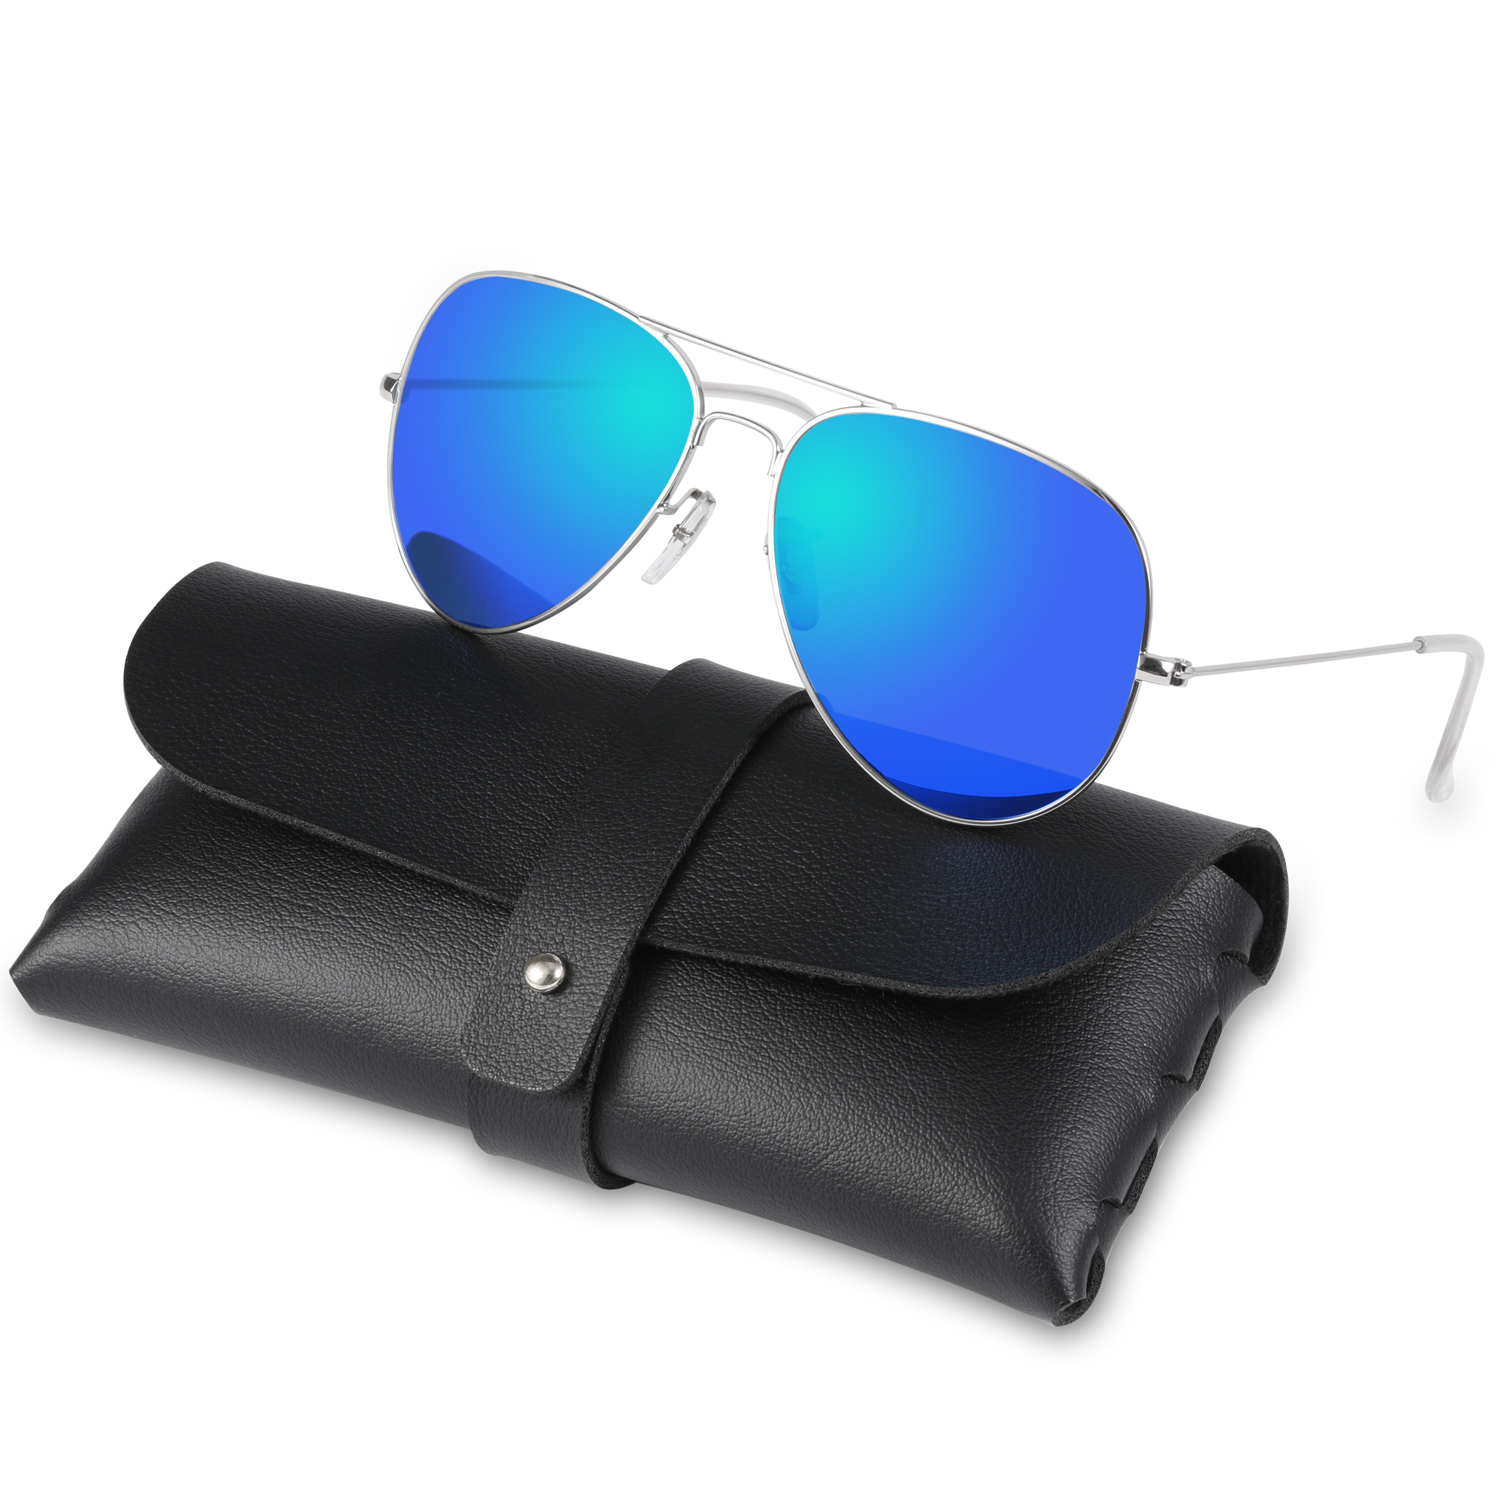 Stylish Blue] eBay Mirrored Polarized UV | Sunglasses Womens Lens Aviator Protection